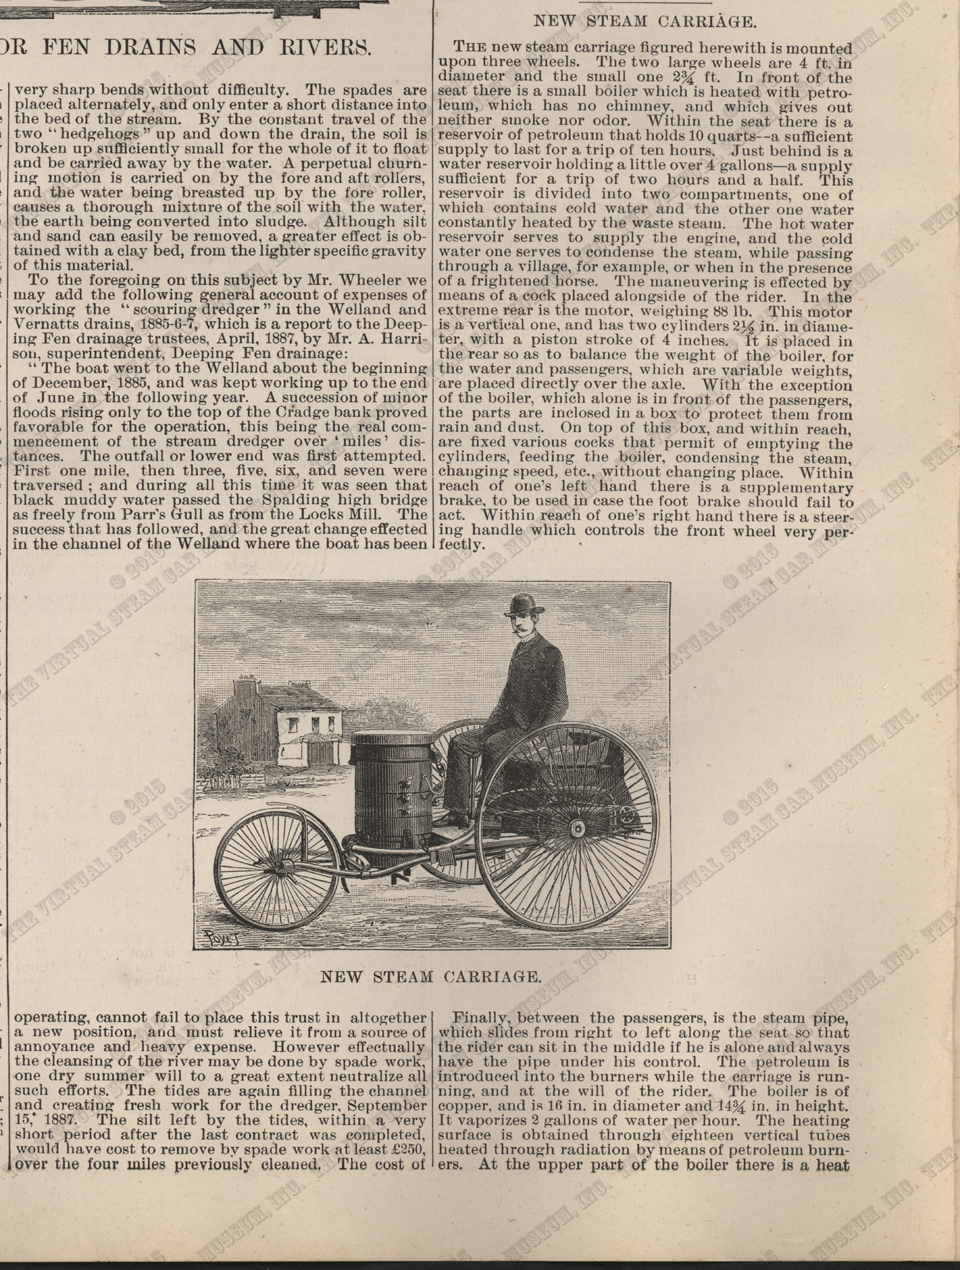 Steam Carriage, Scientific American Supplement, December 17, 1887, La Nature, p. 9962